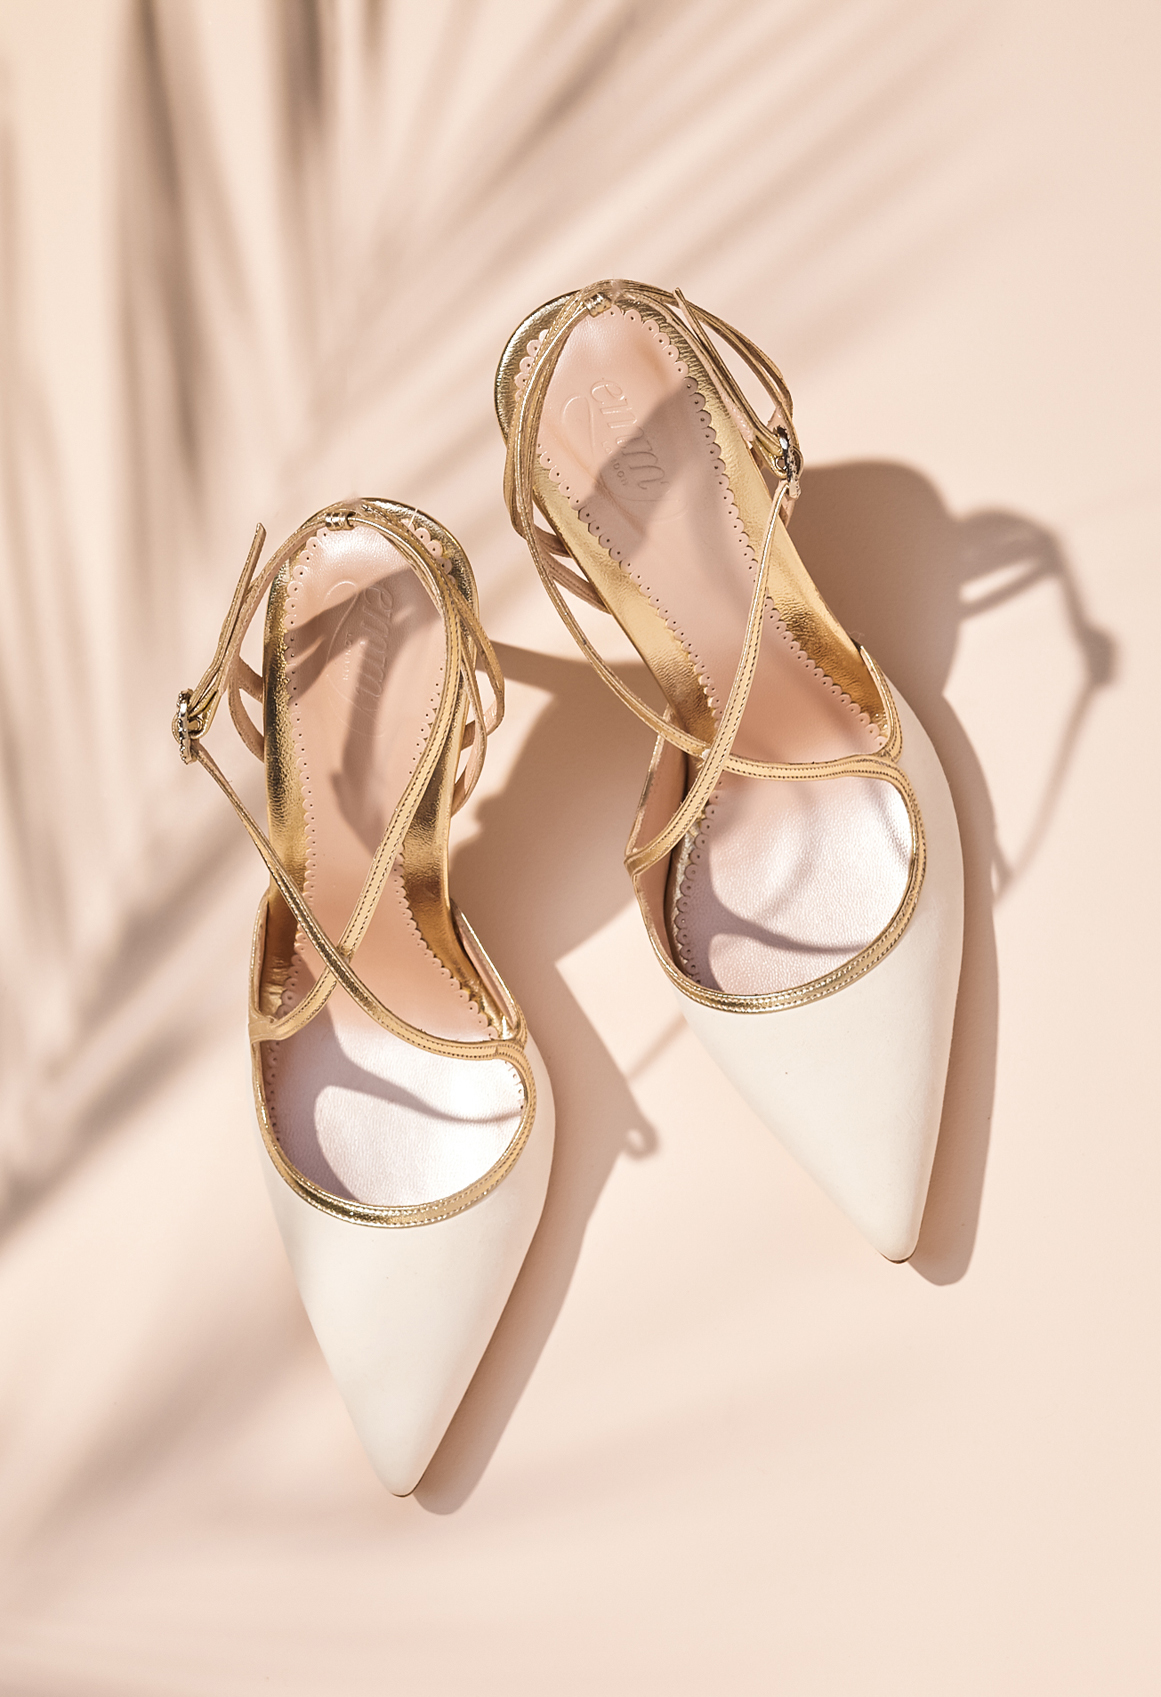 Elegant high heel pointed wedding shoes, Emmy London.